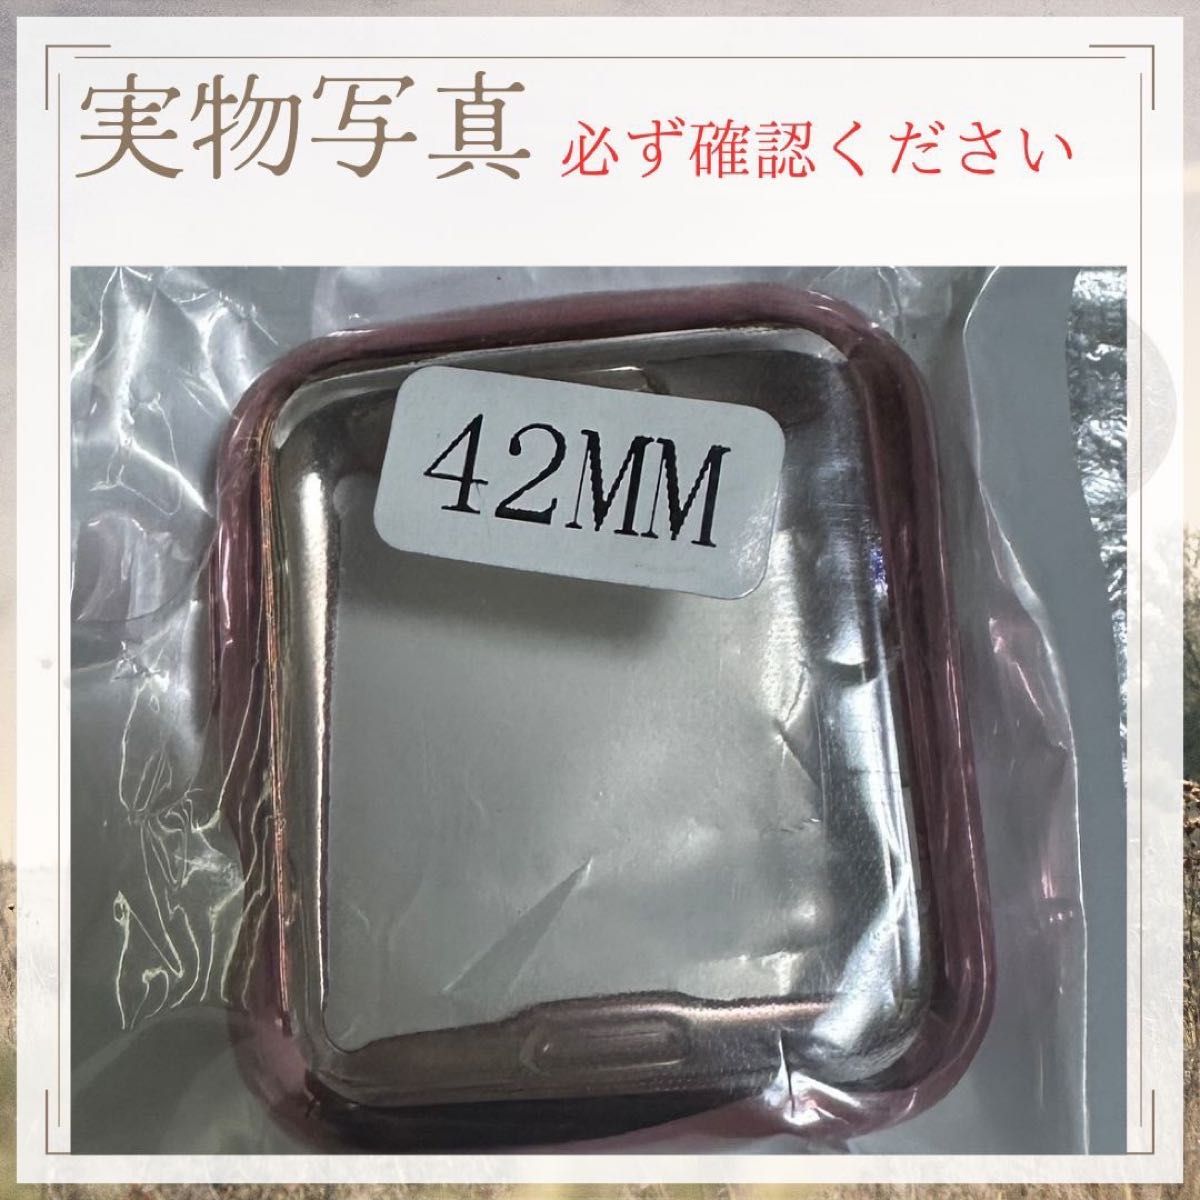 AppleWatch  ケース  カバー TPU ピンク 44mm